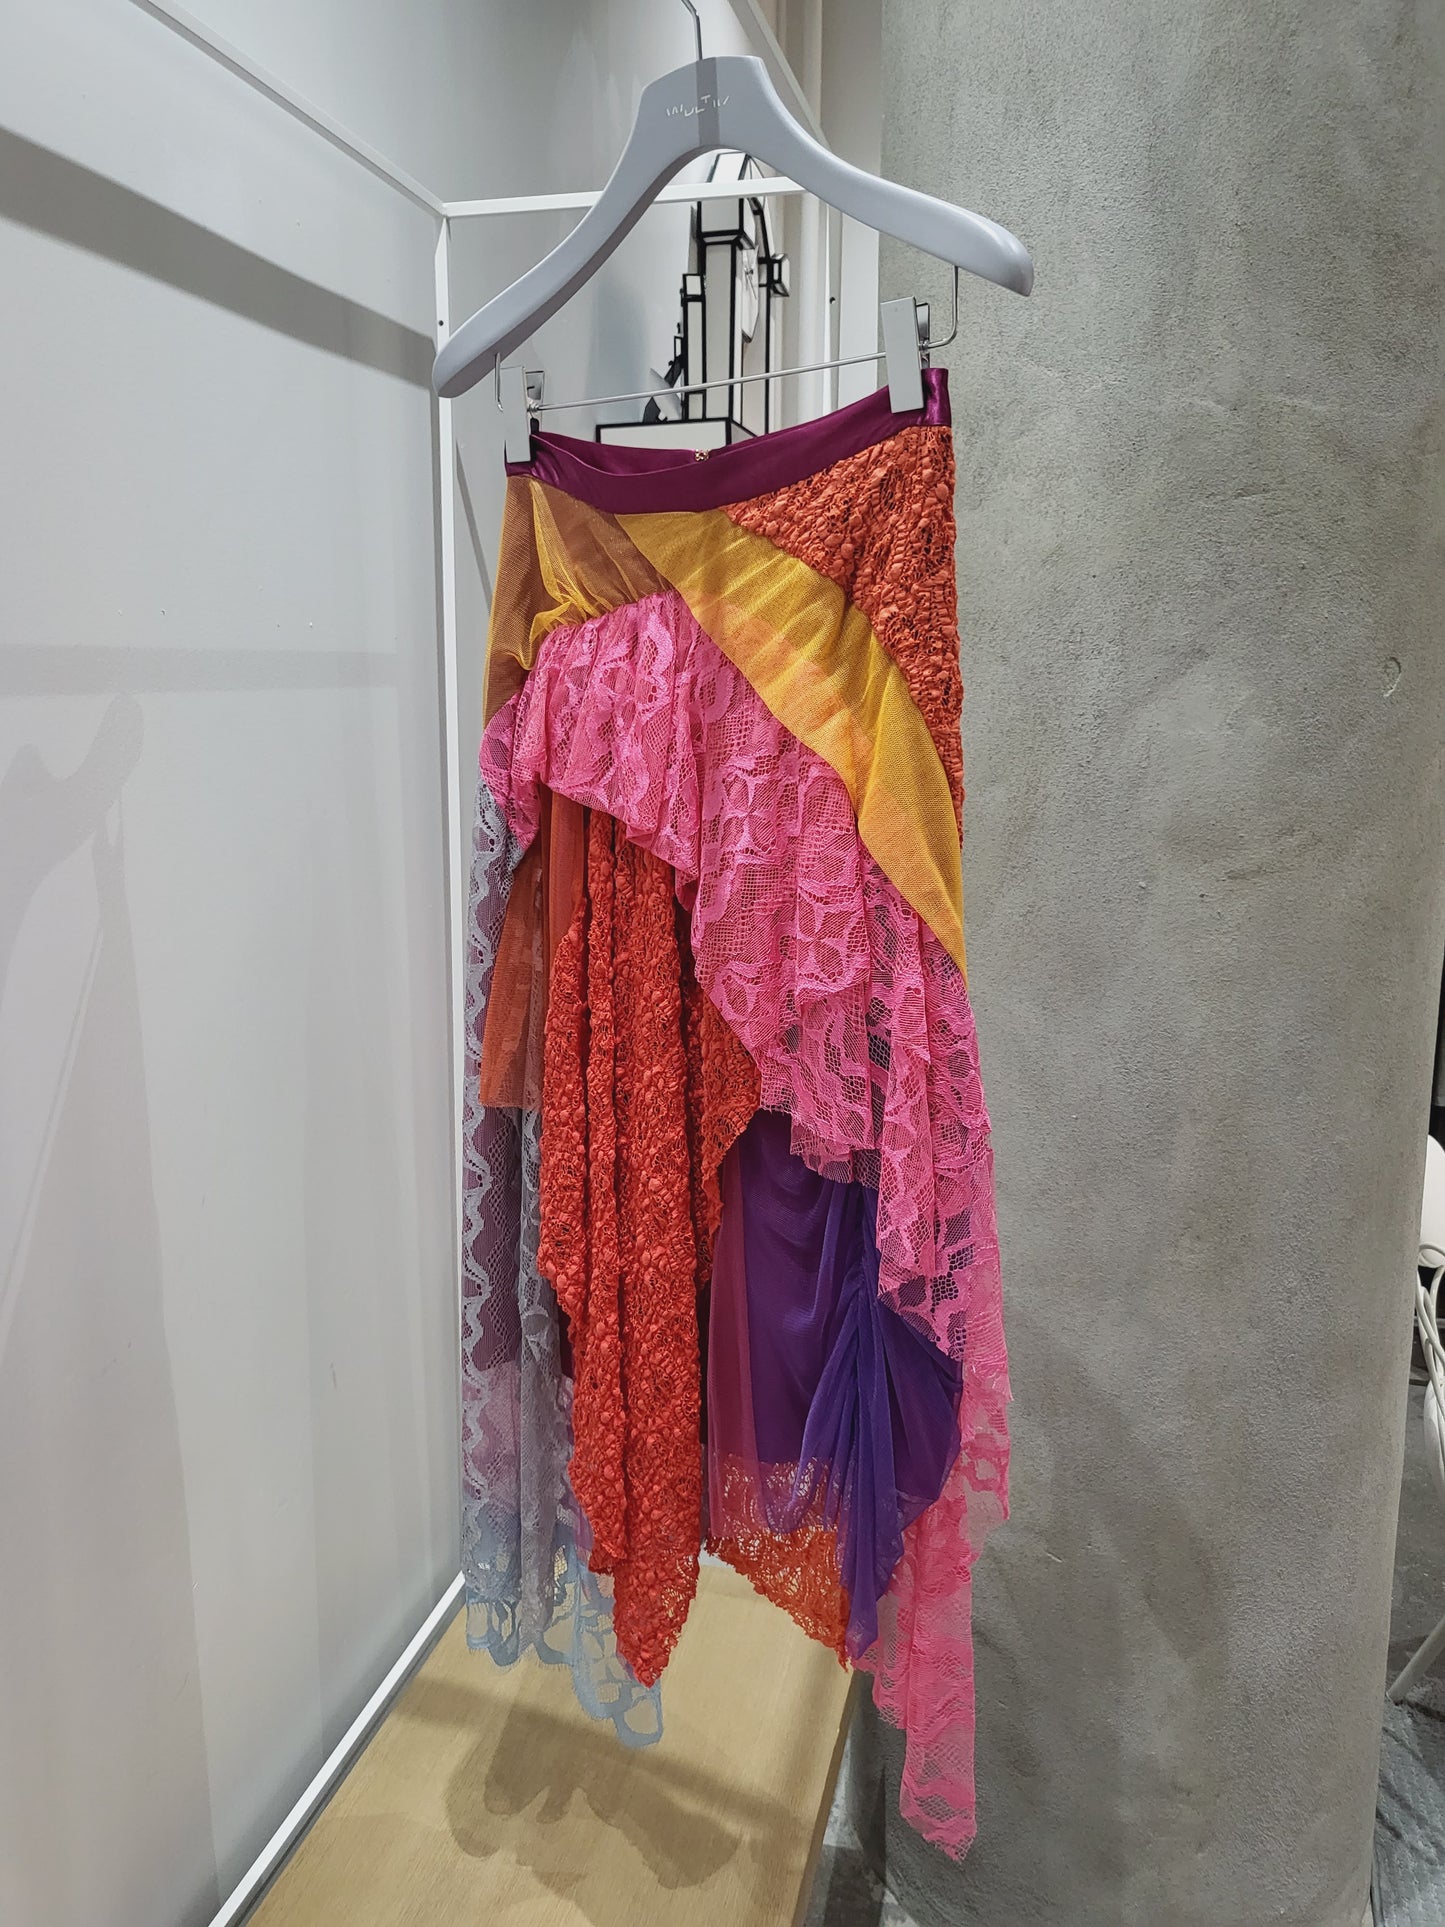 Sies Marjan - Multicoloured Patchwork Lace Skirt